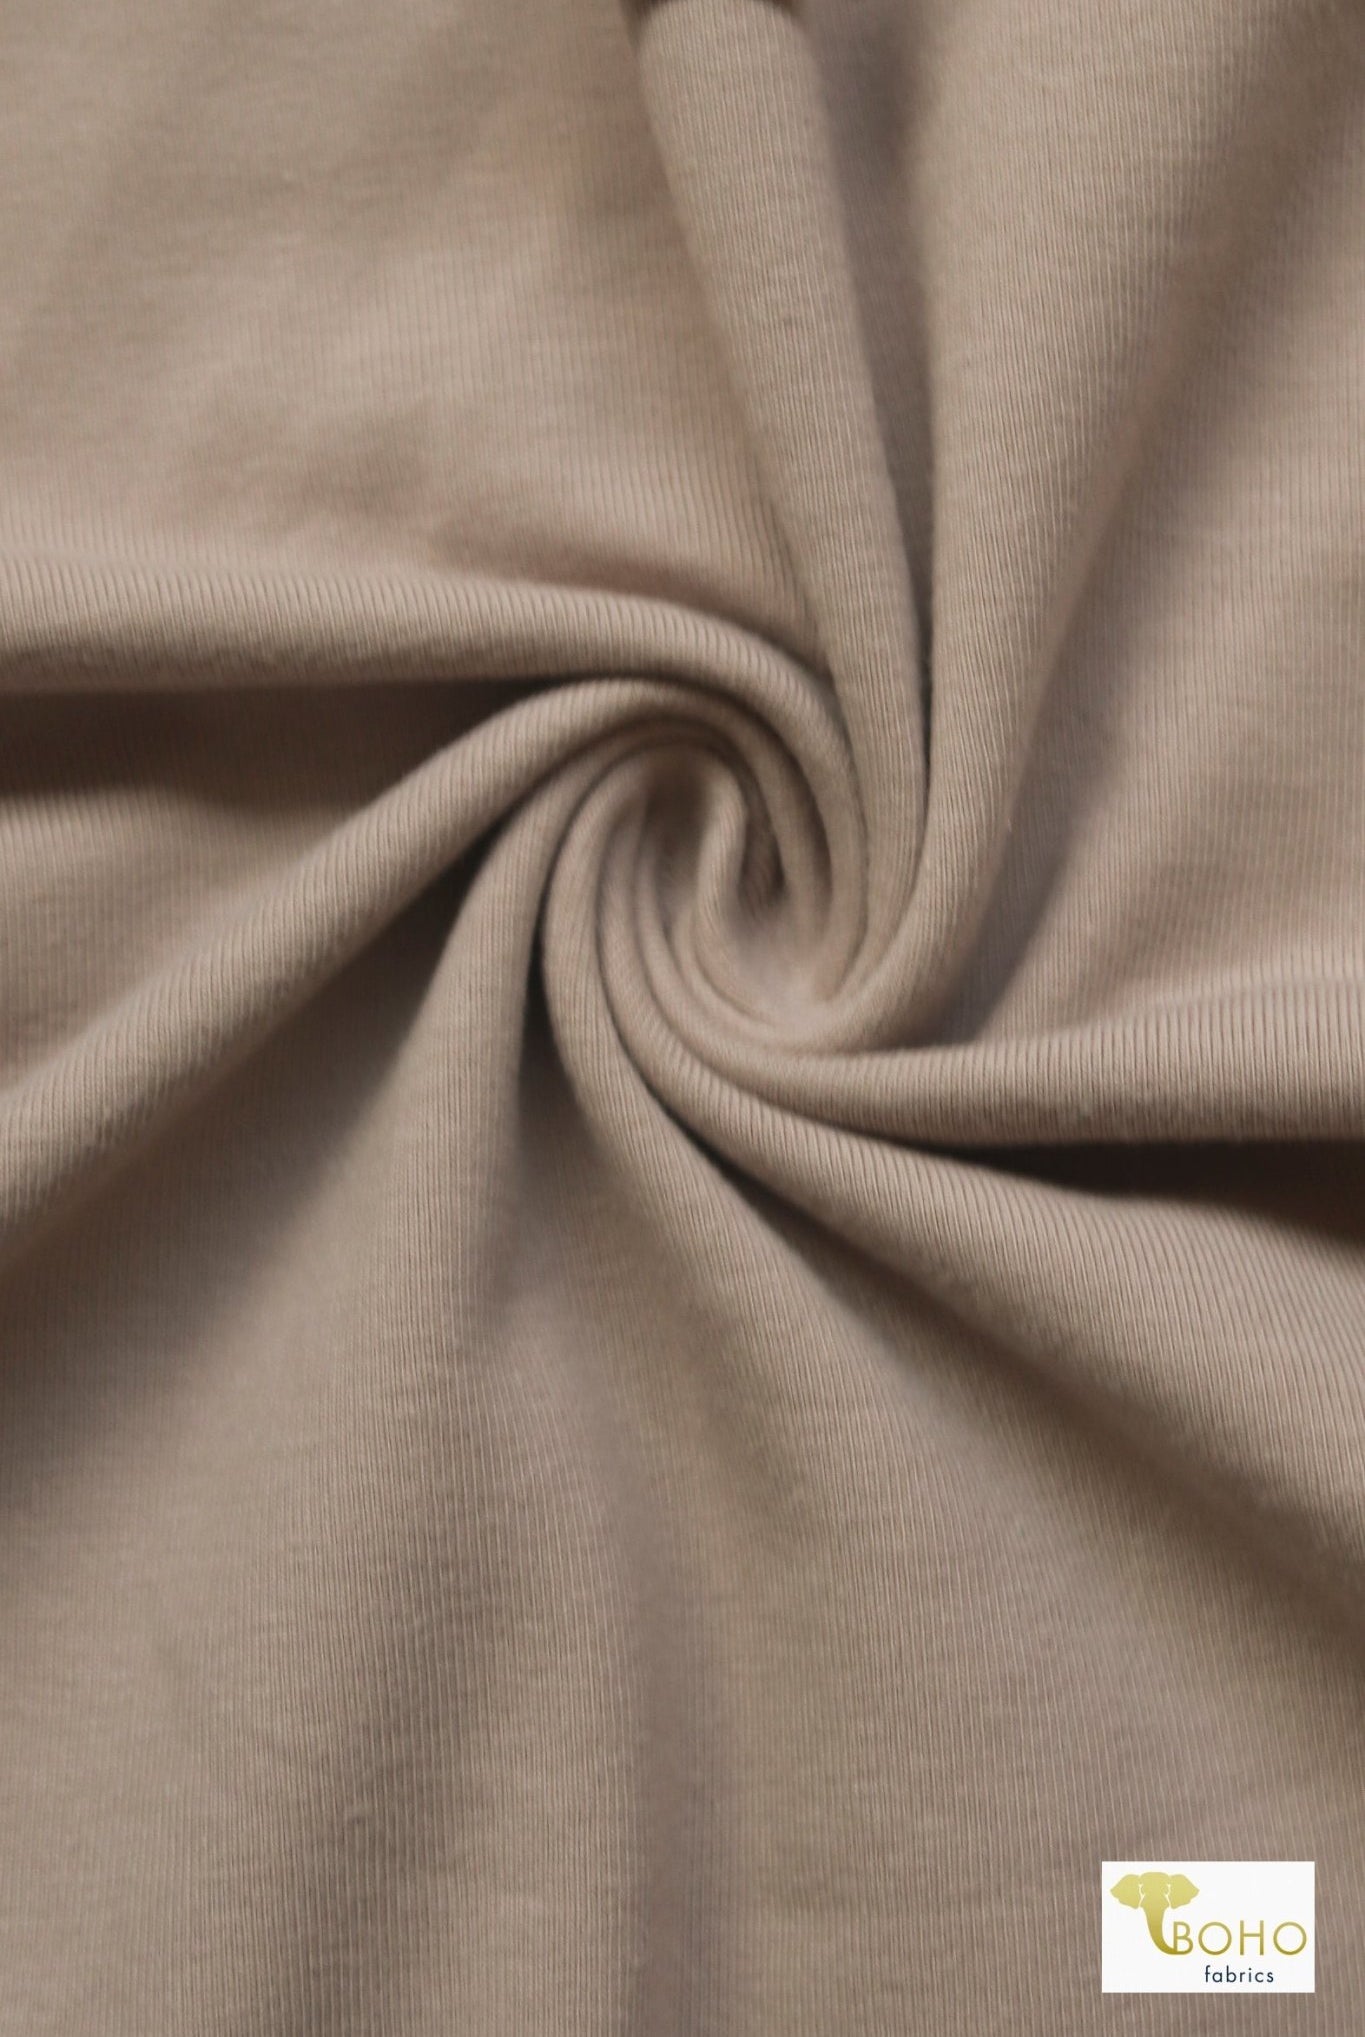 Warm Stone, Solid Cotton Spandex Knit Fabric, 9 oz. - Boho Fabrics